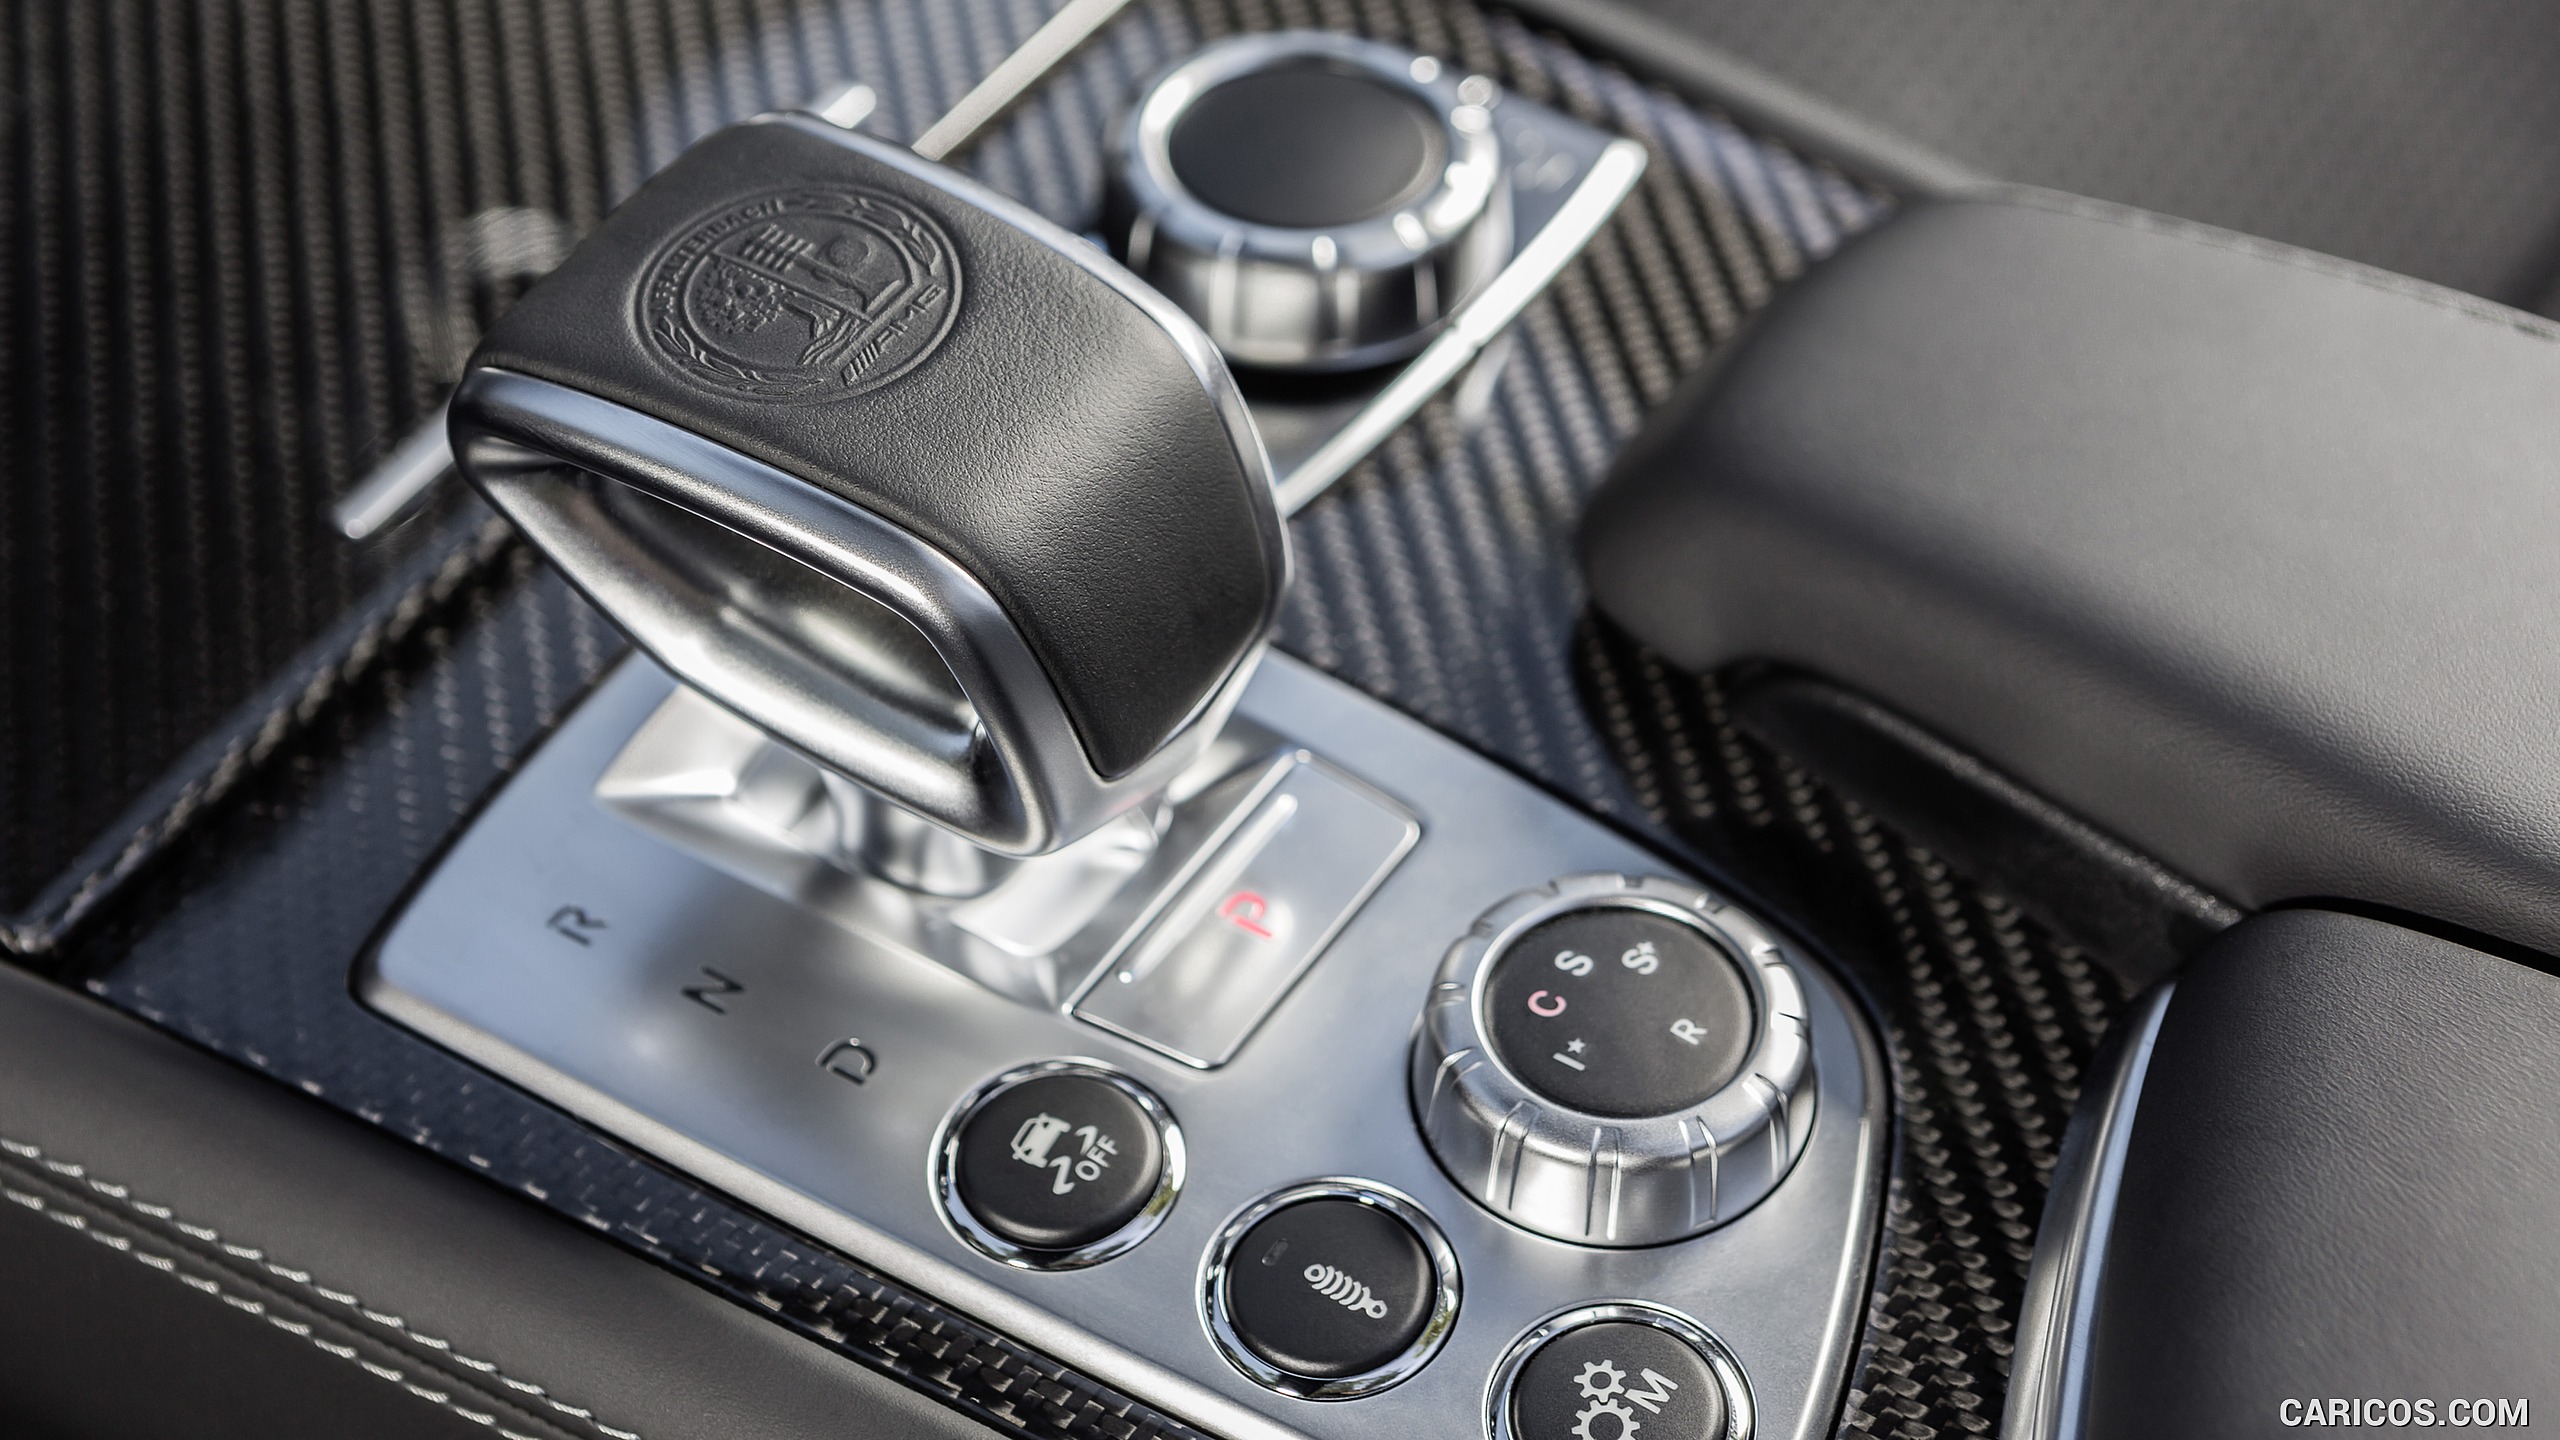 2017 Mercedes-AMG SL 63 - Leather Black Interior with AMG Carbon Trim - Interior, Controls, #27 of 39